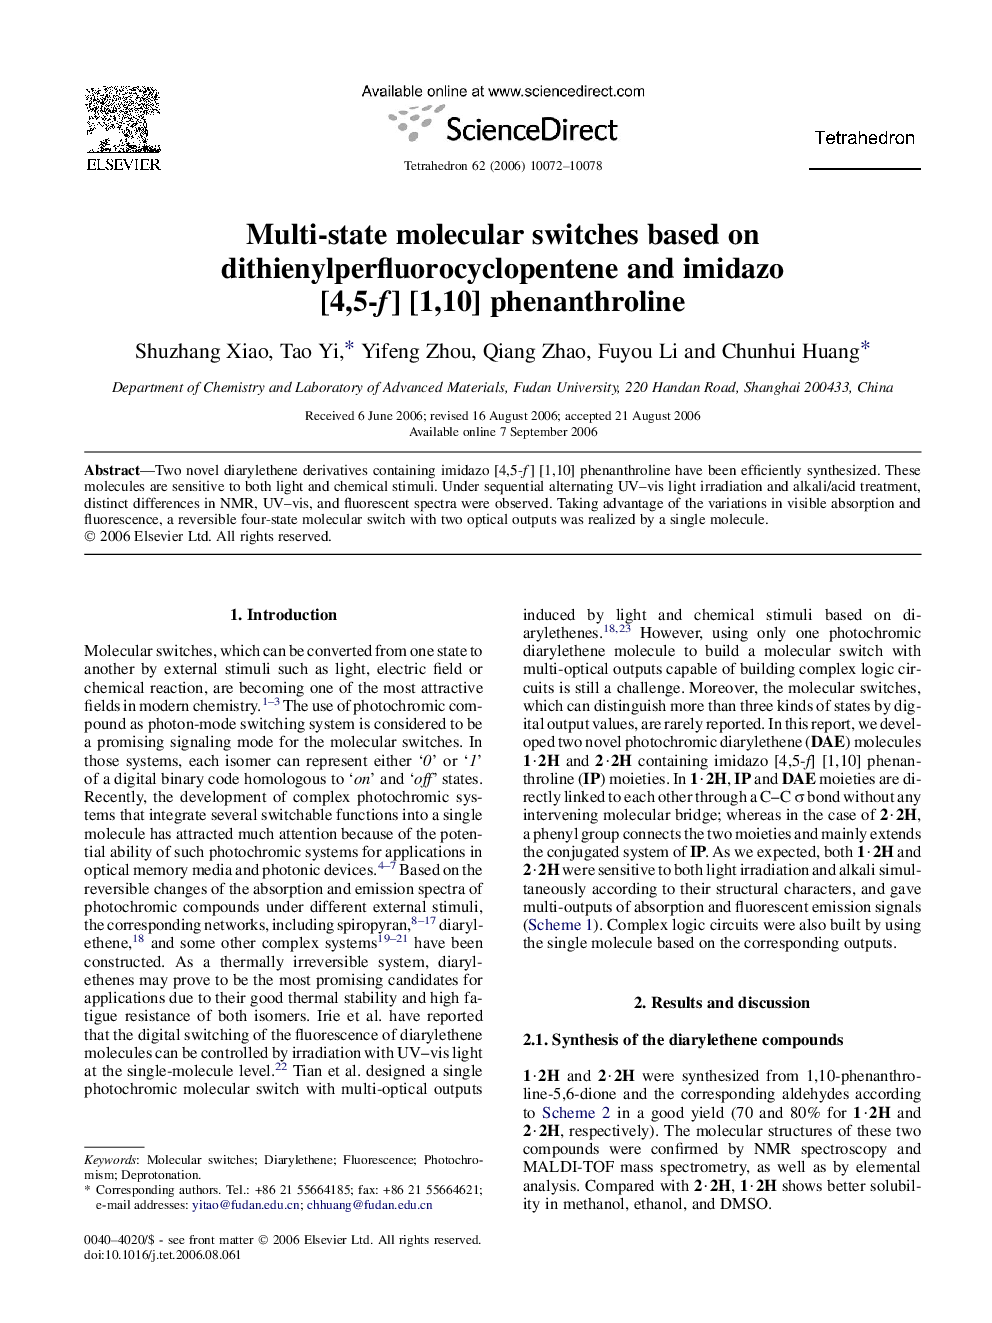 Multi-state molecular switches based on dithienylperfluorocyclopentene and imidazo [4,5-f] [1,10] phenanthroline